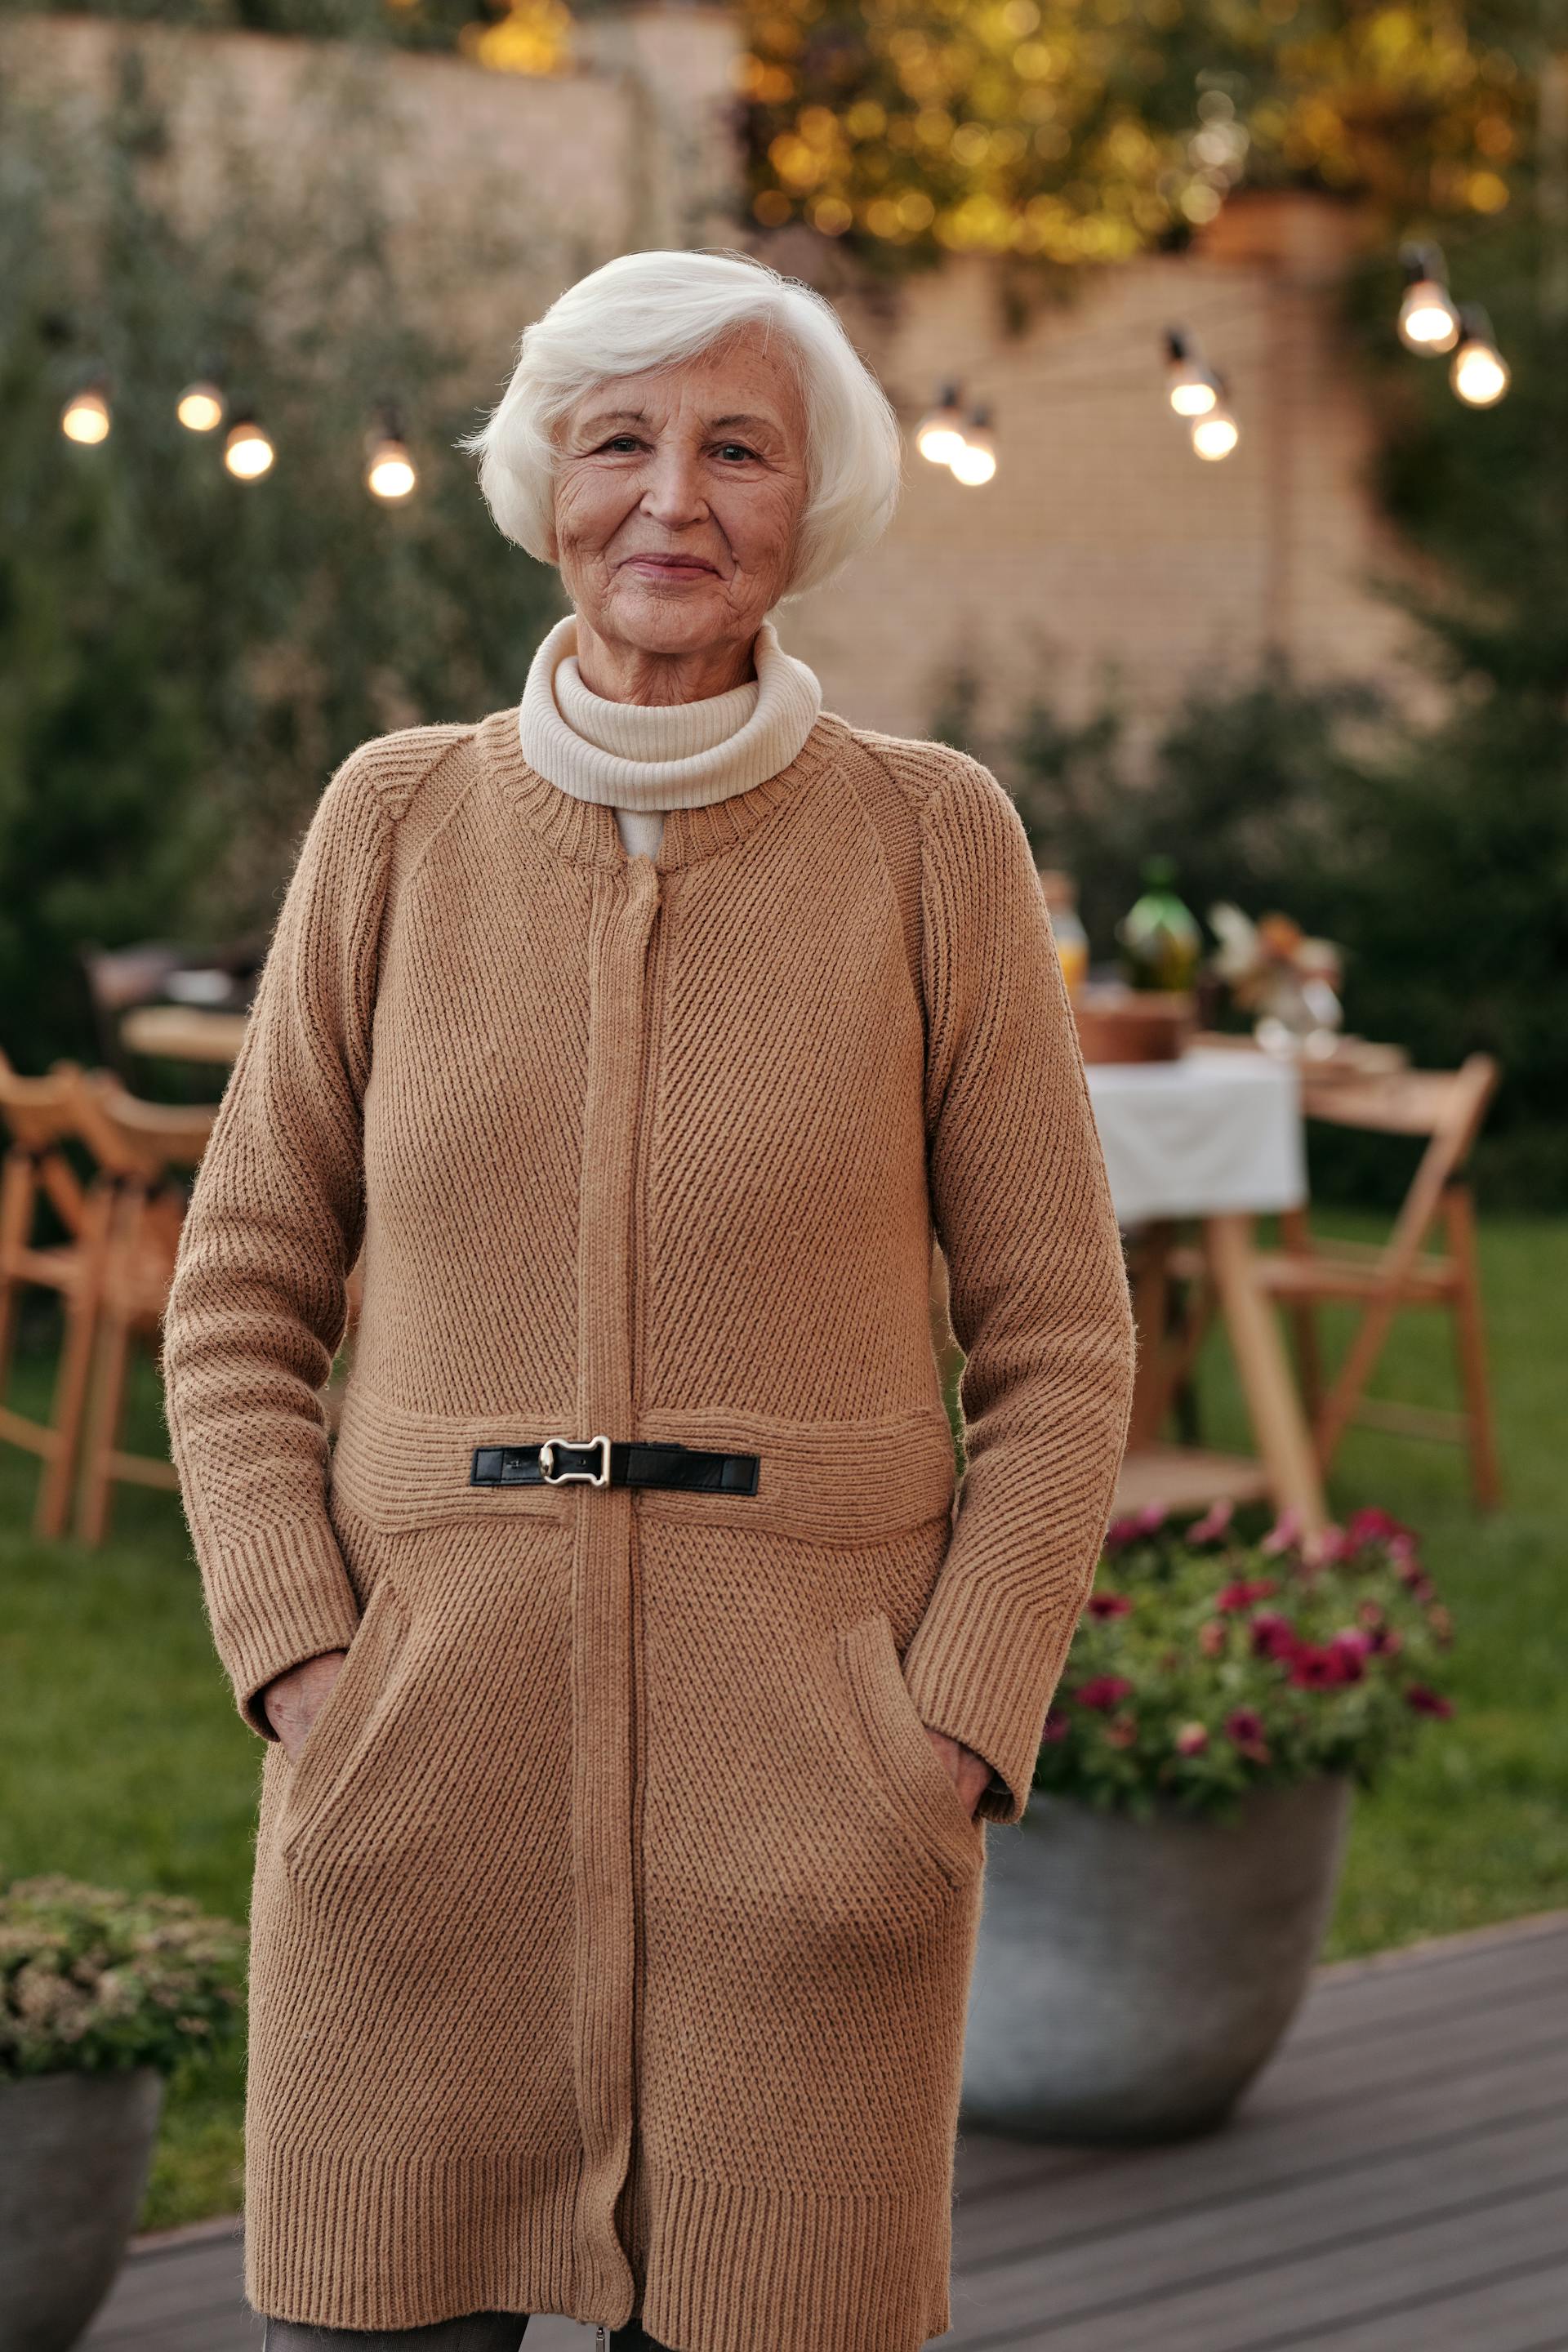 An elderly woman standing in a garden | Source: Pexels